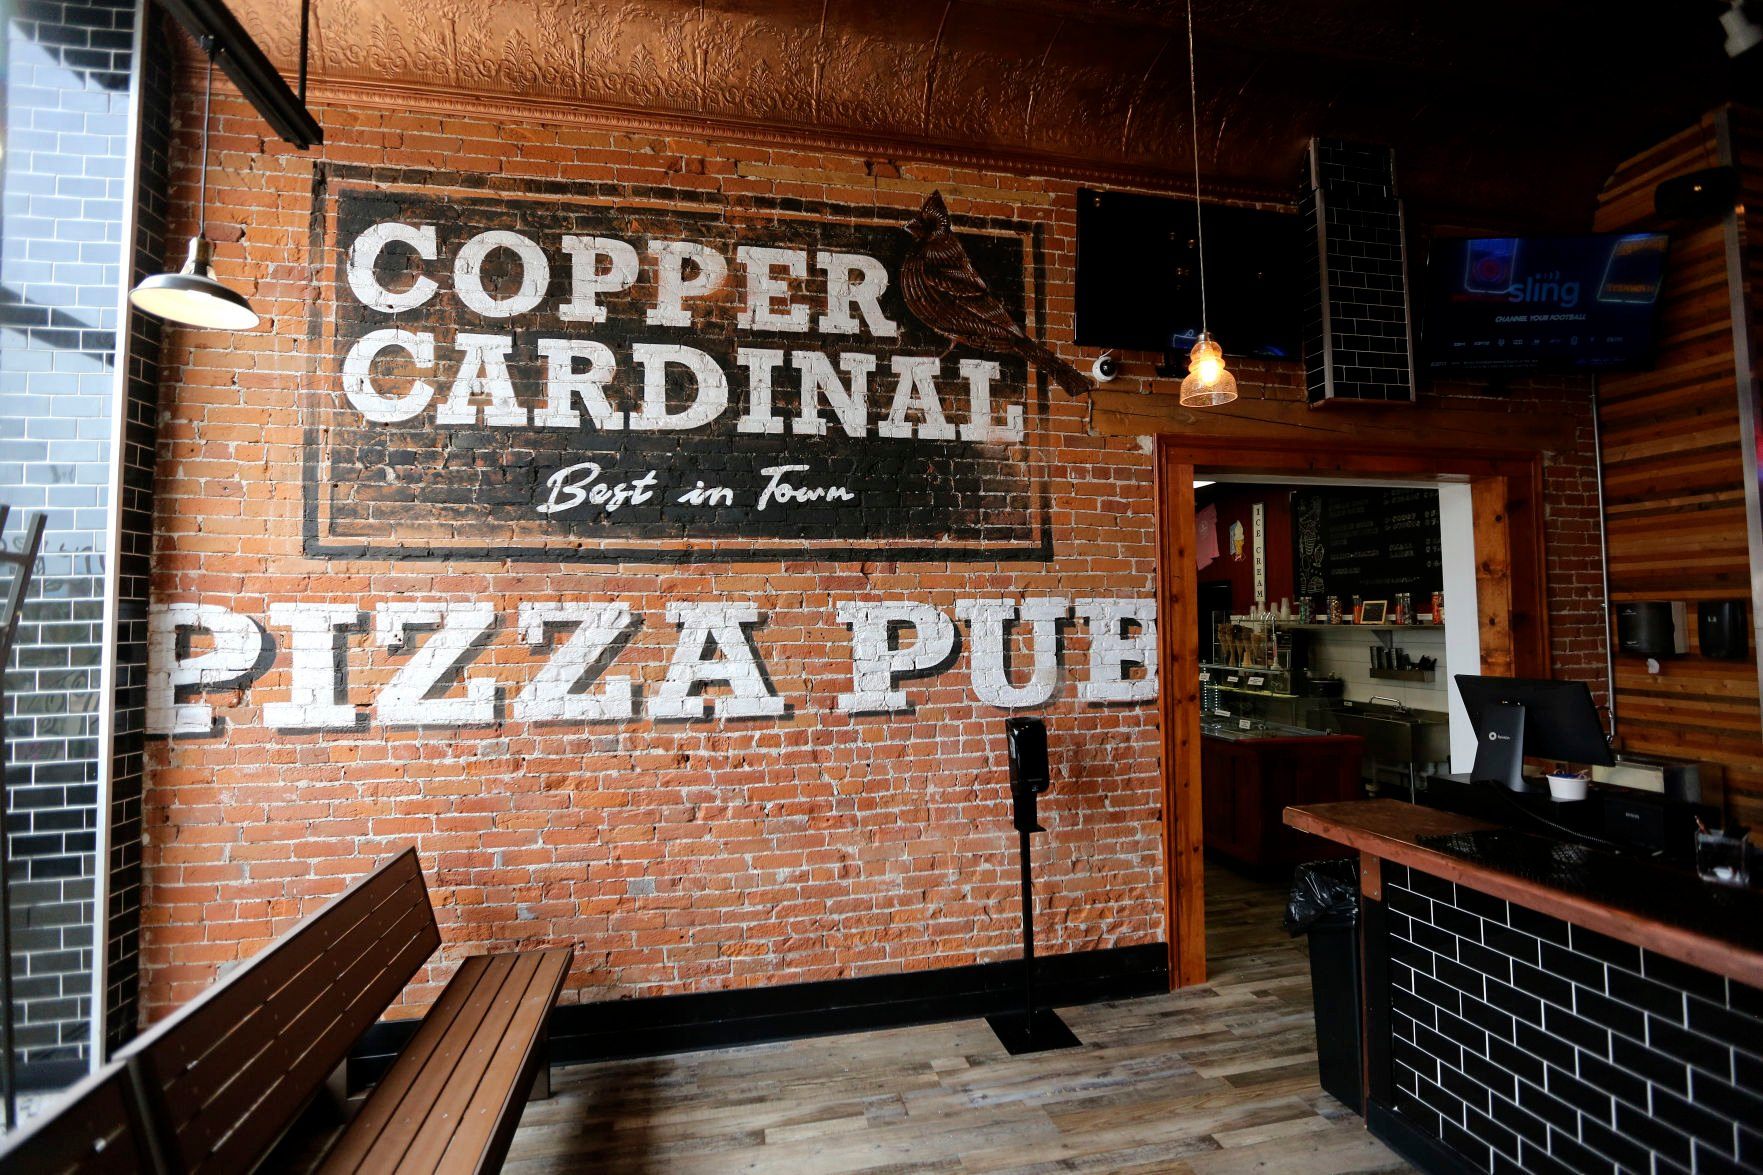 Copper Cardinal Pizza Pub is located in Maquoketa, Iowa.    PHOTO CREDIT: Dave Kettering